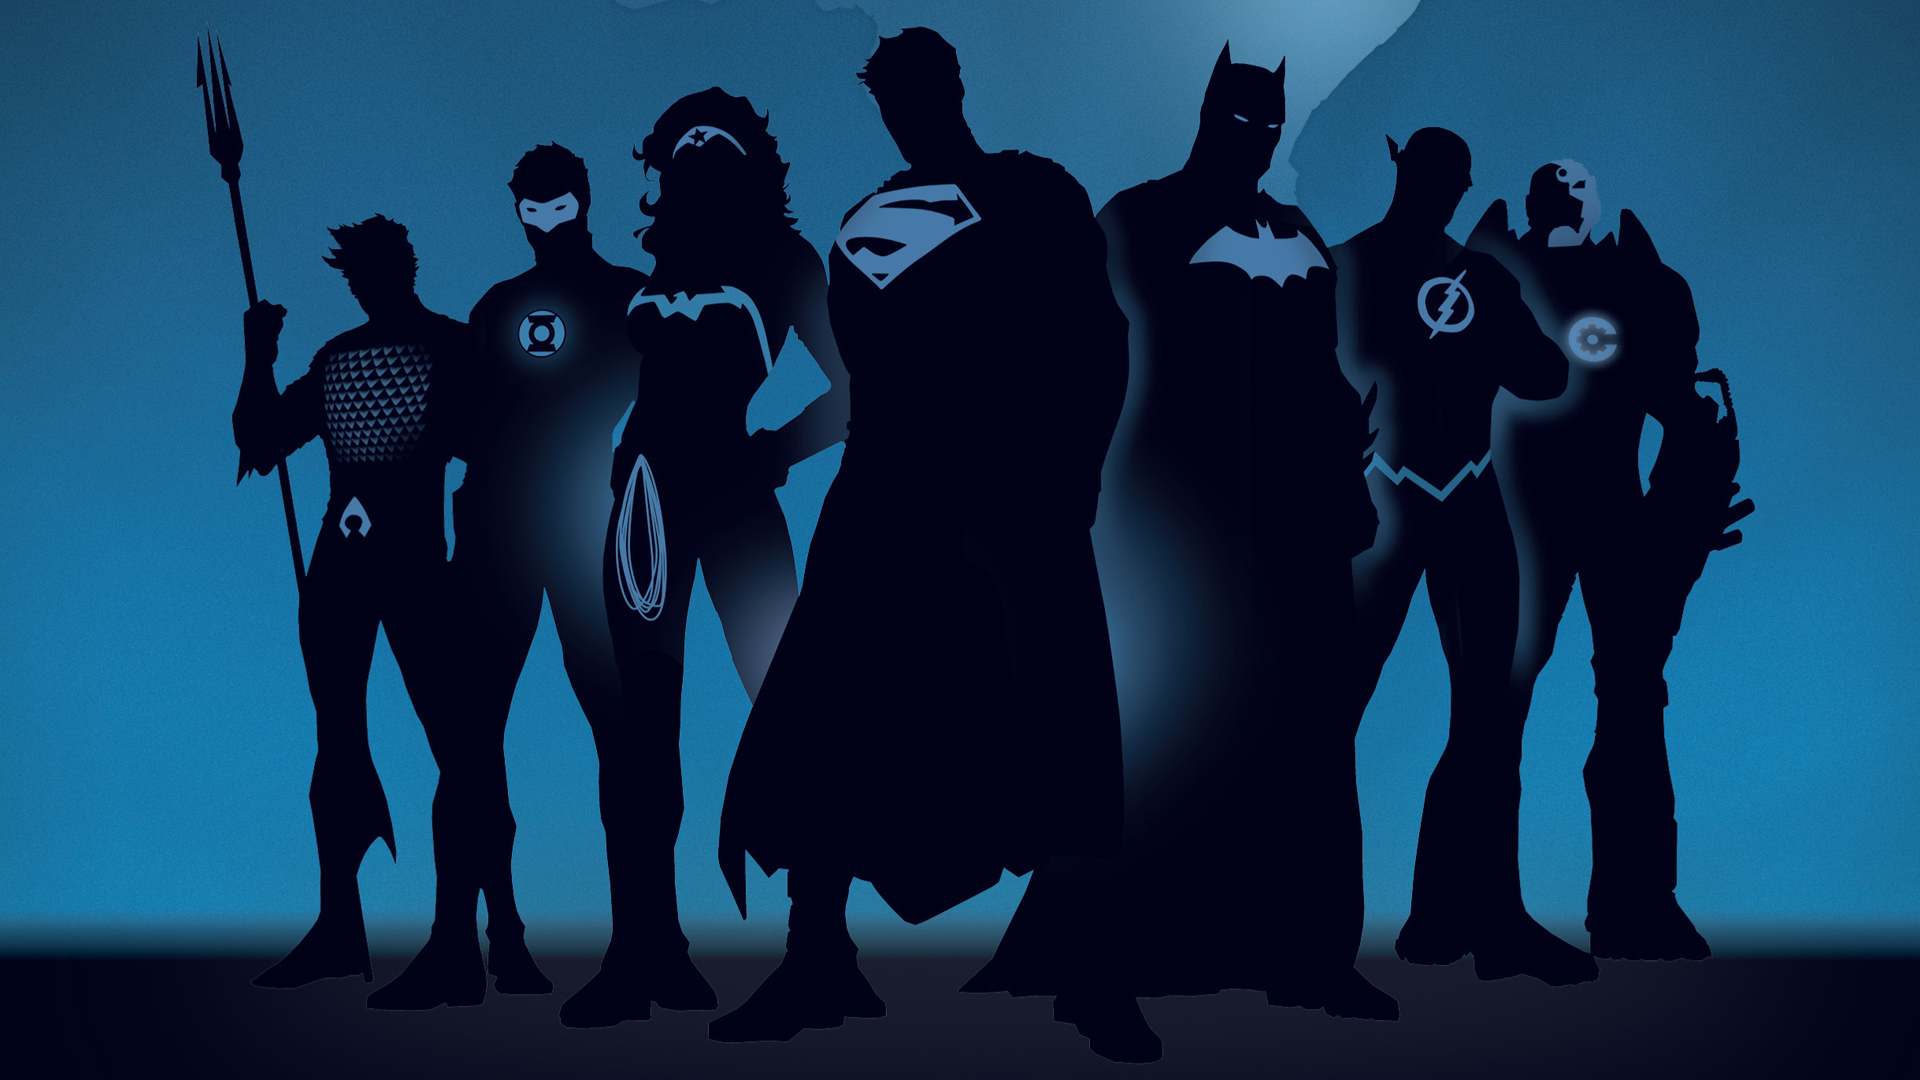 bruce wayne, superman, batman, cyborg (dc comics), dc comics, comics, aquaman, the dark knight, diana prince, justice league, wonder woman, barry allen, flash, green lantern